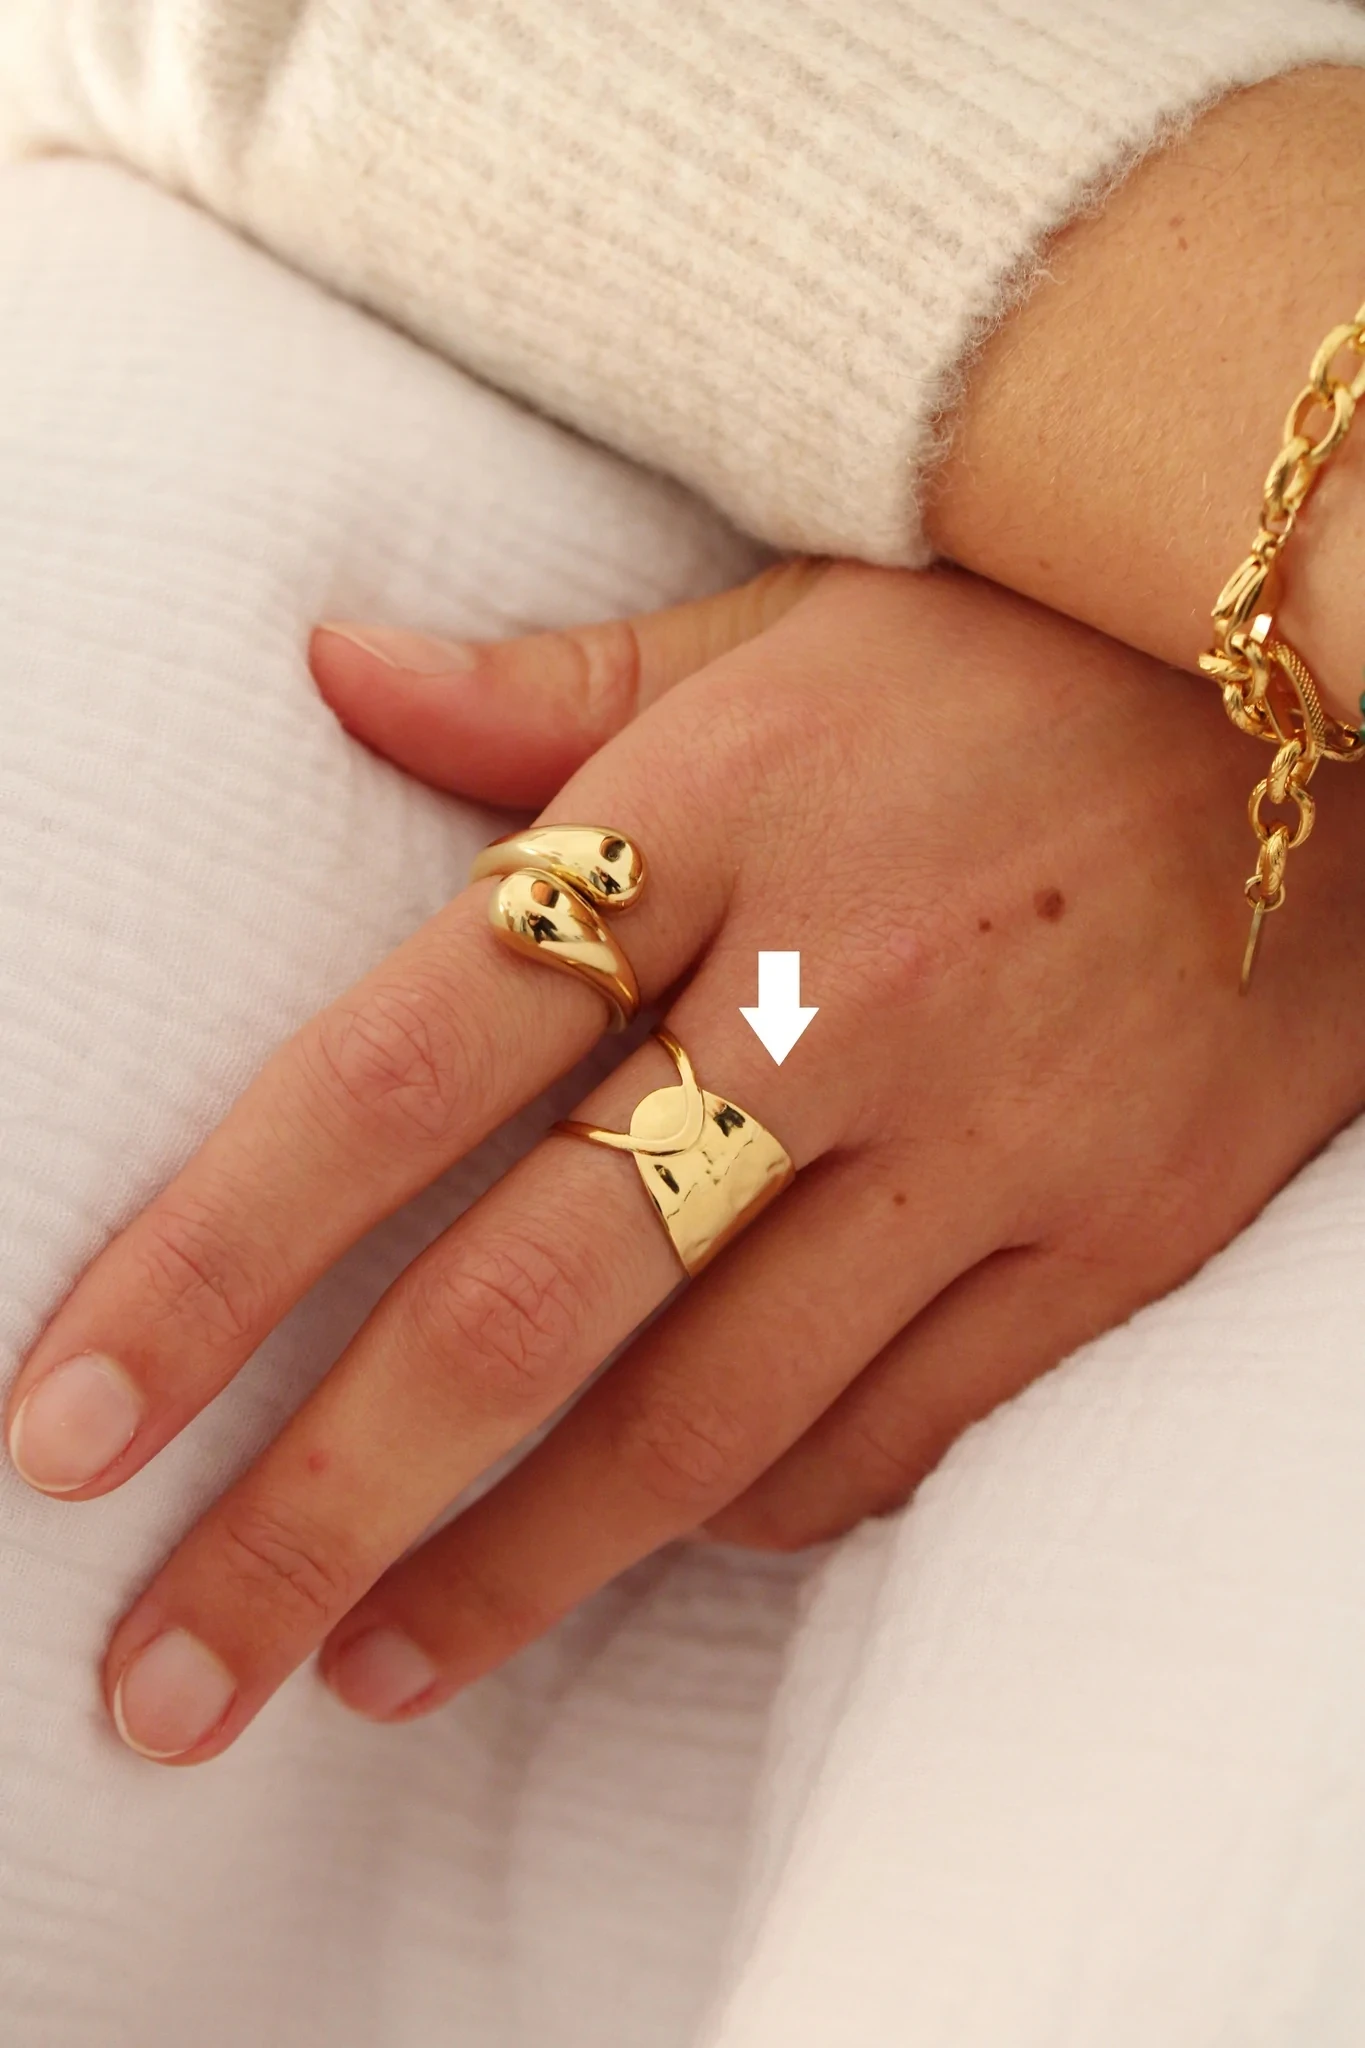 Youthway Minimalist Geometric Stainless Steel Finger Ring Waterproof Jewelry кольца для женщин Gift 3